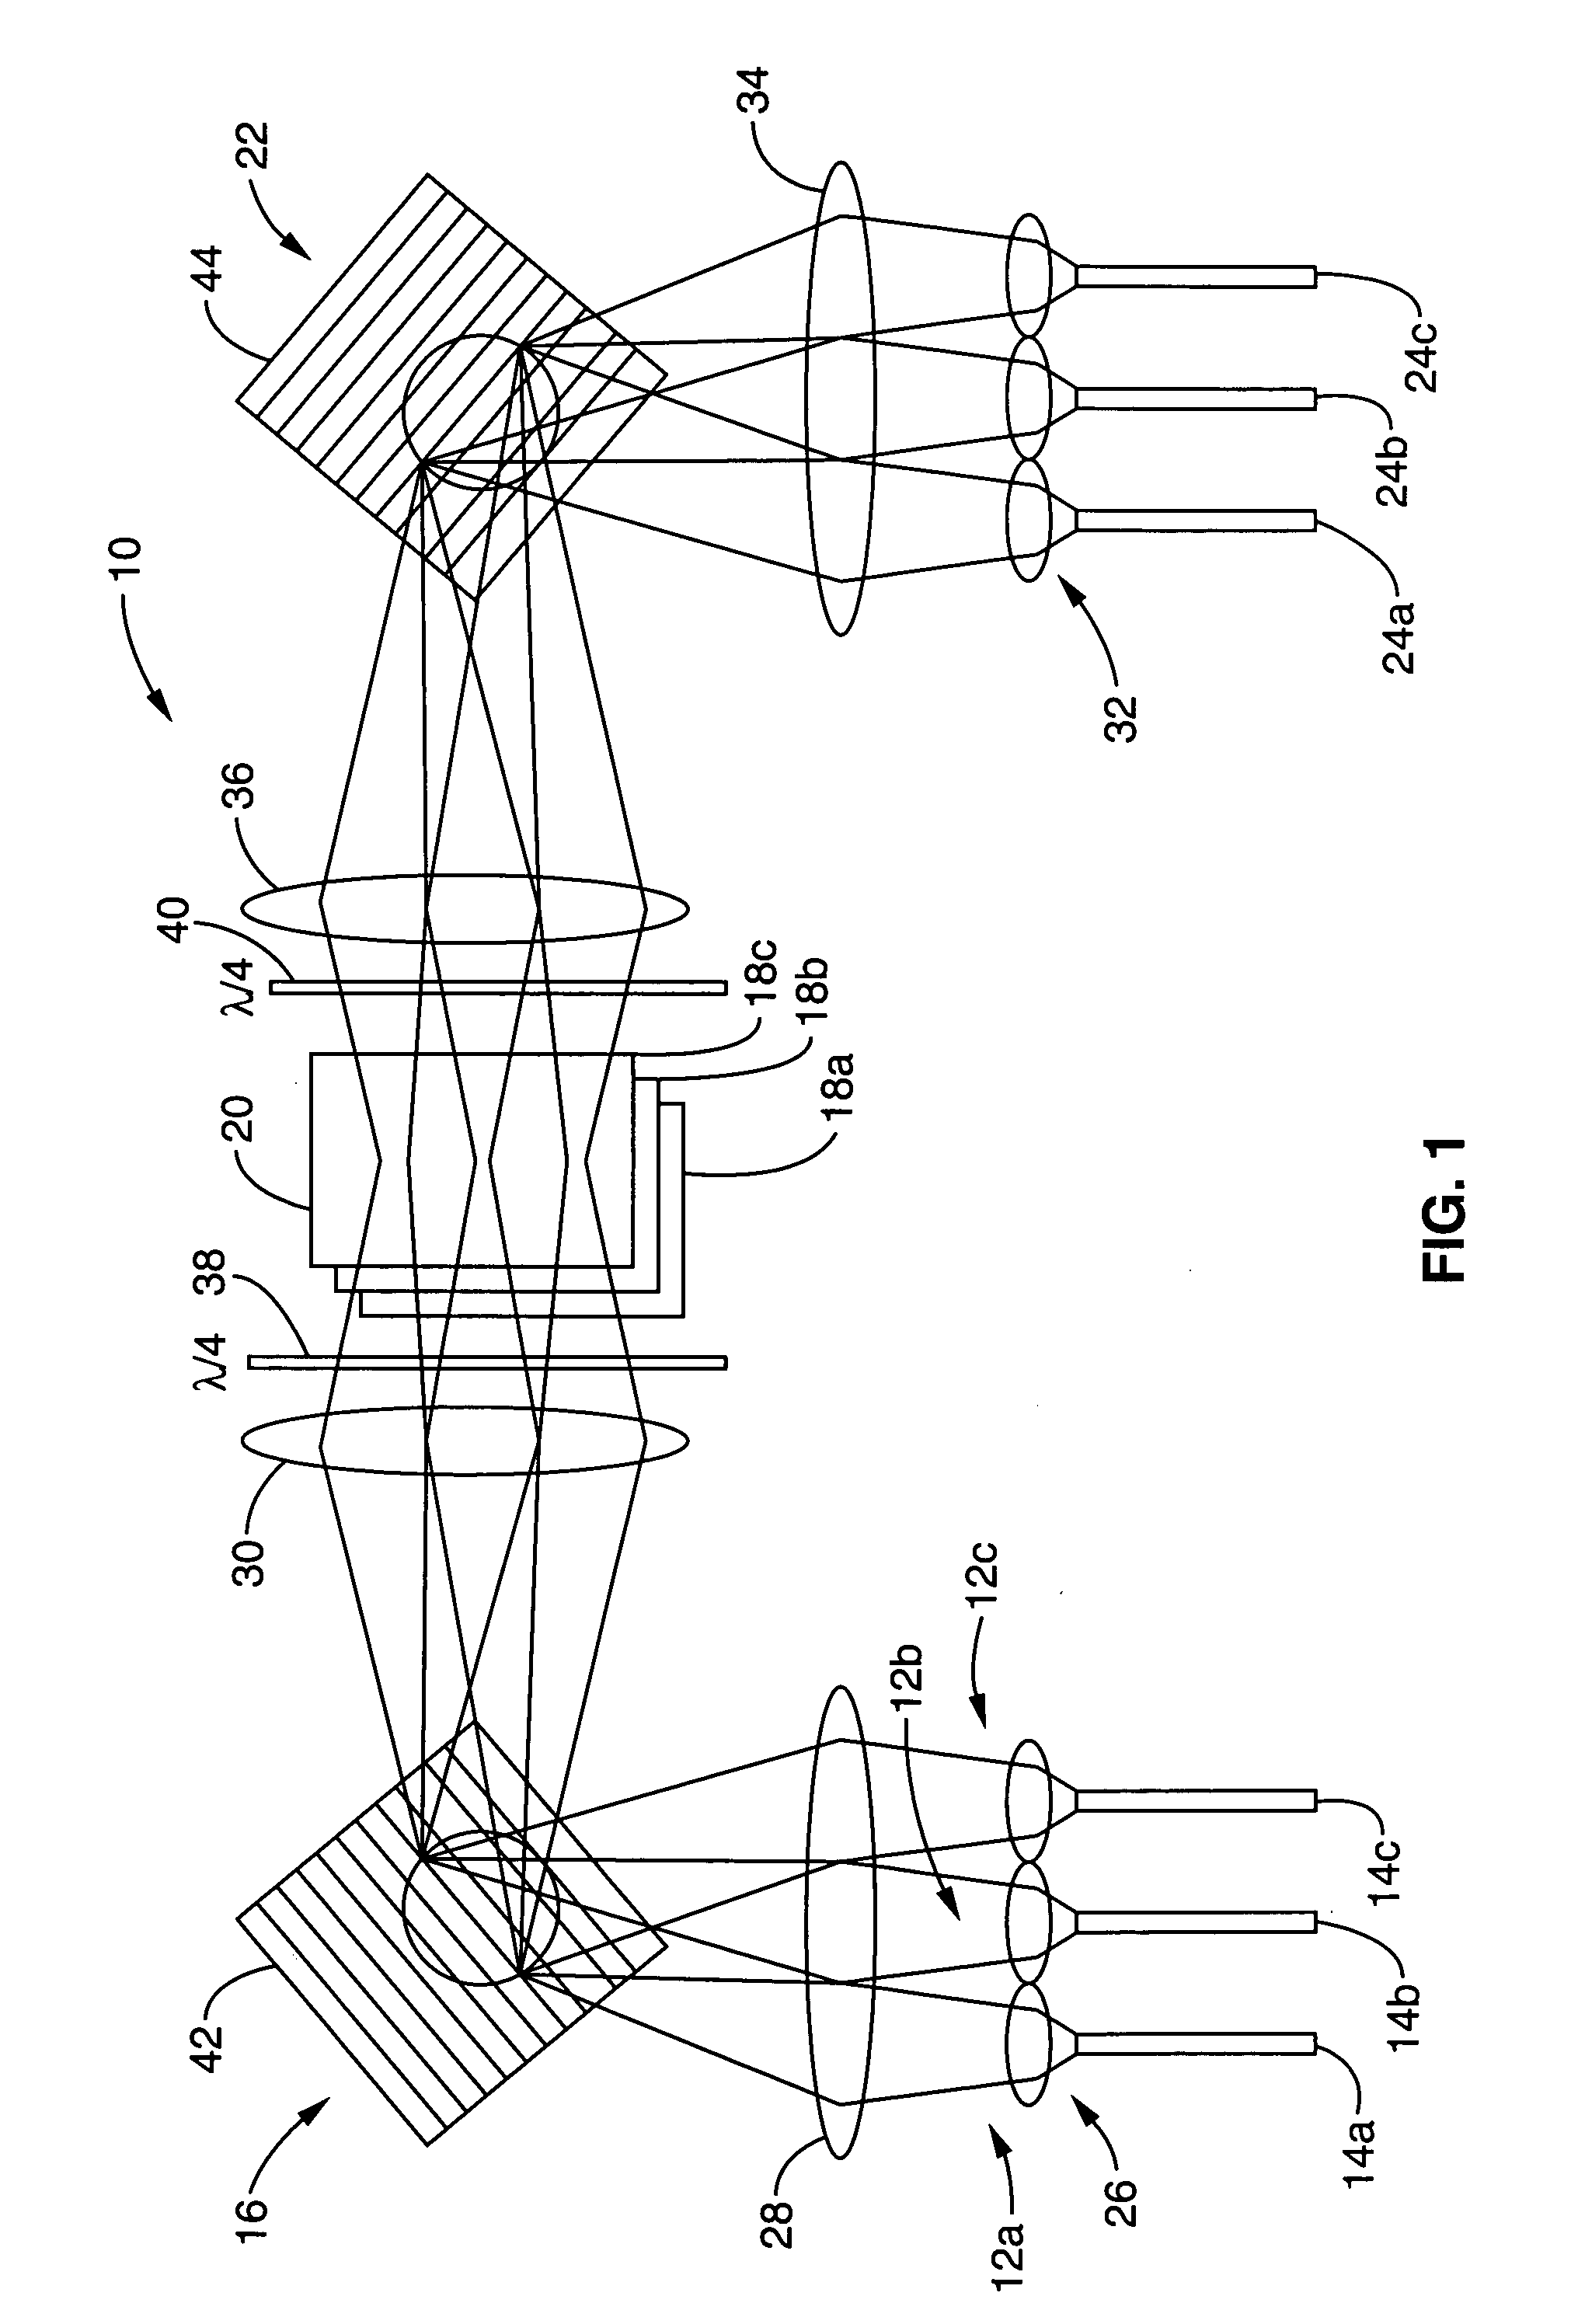 Multi-wavelength cross-connect optical switch